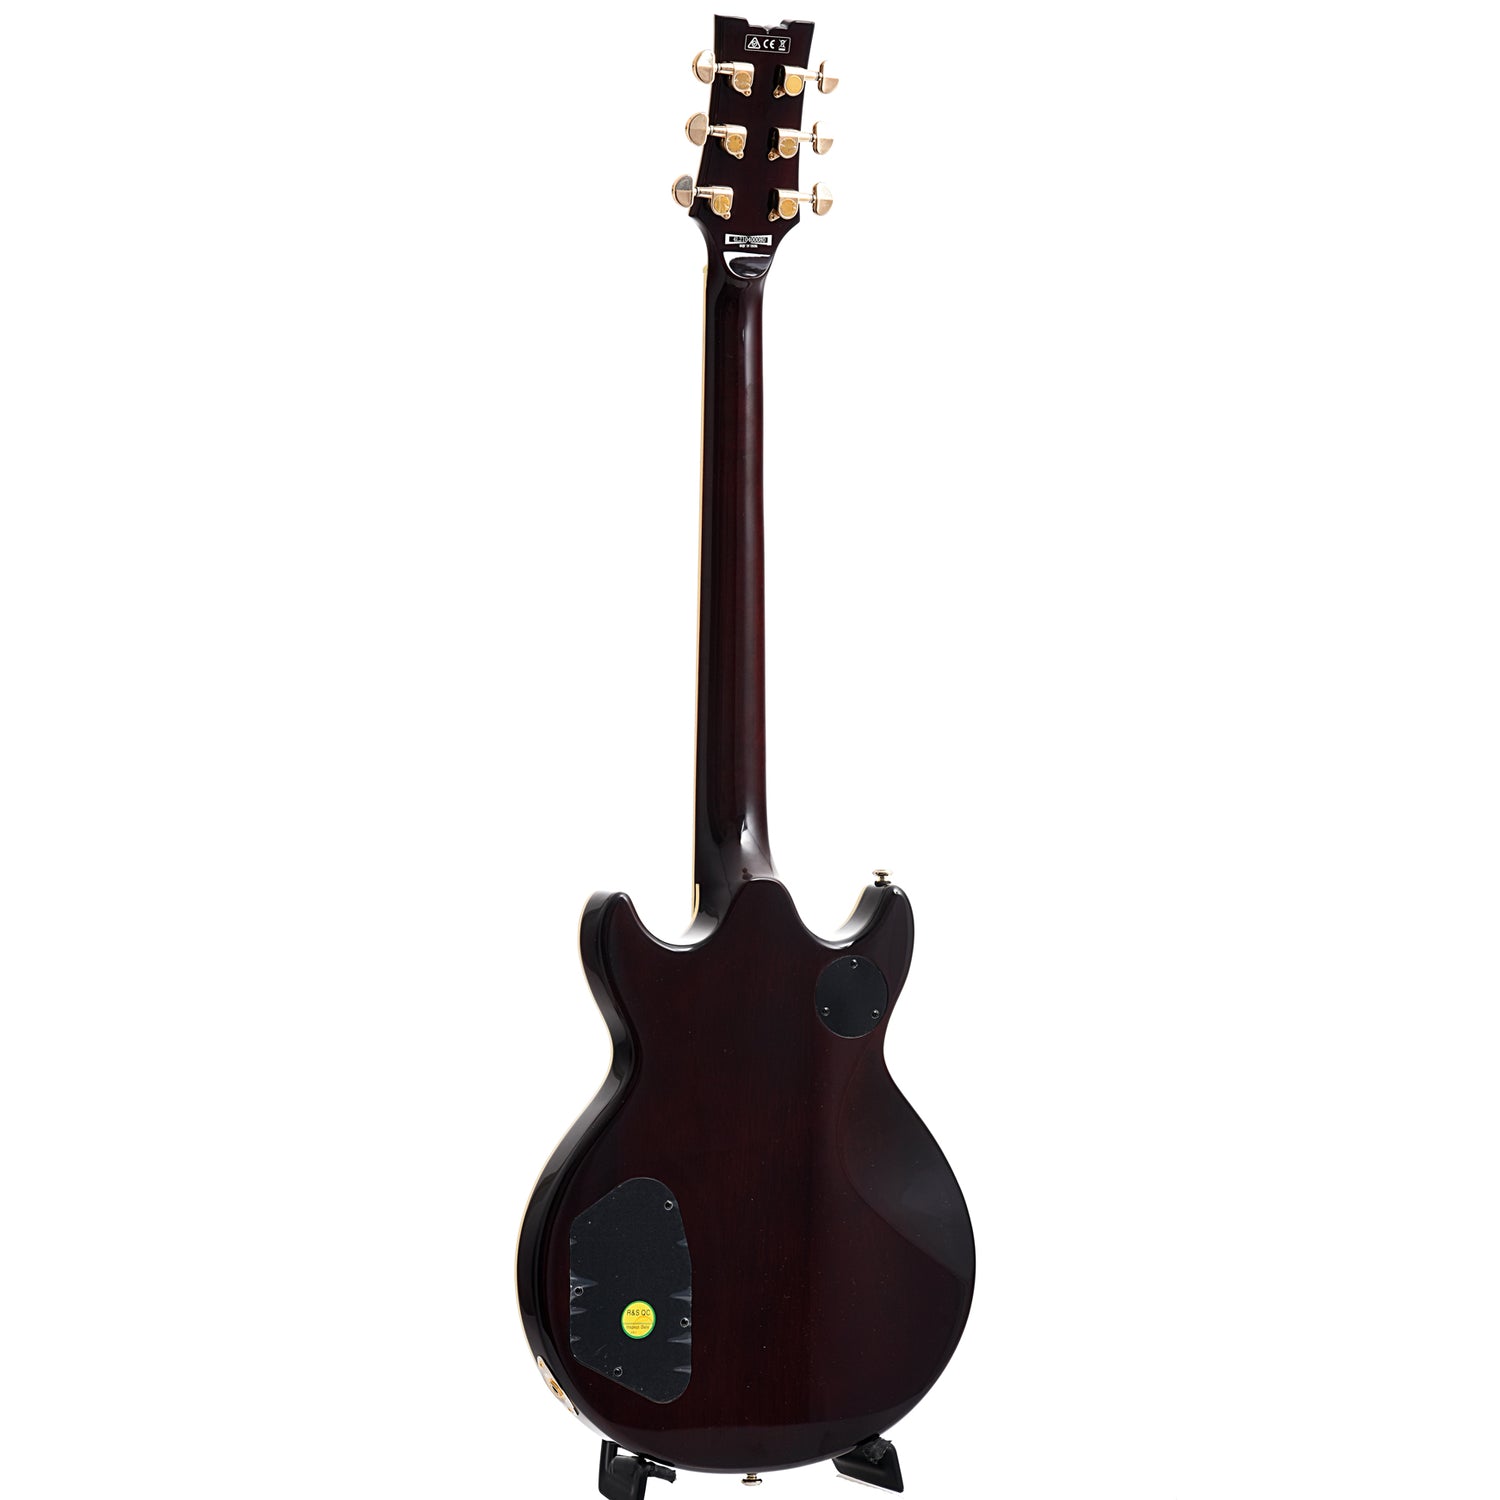 Image 12 of Ibanez AR420 Electric Guitar, Violin Sunburst - SKU# AR420-VLS : Product Type Solid Body Electric Guitars : Elderly Instruments